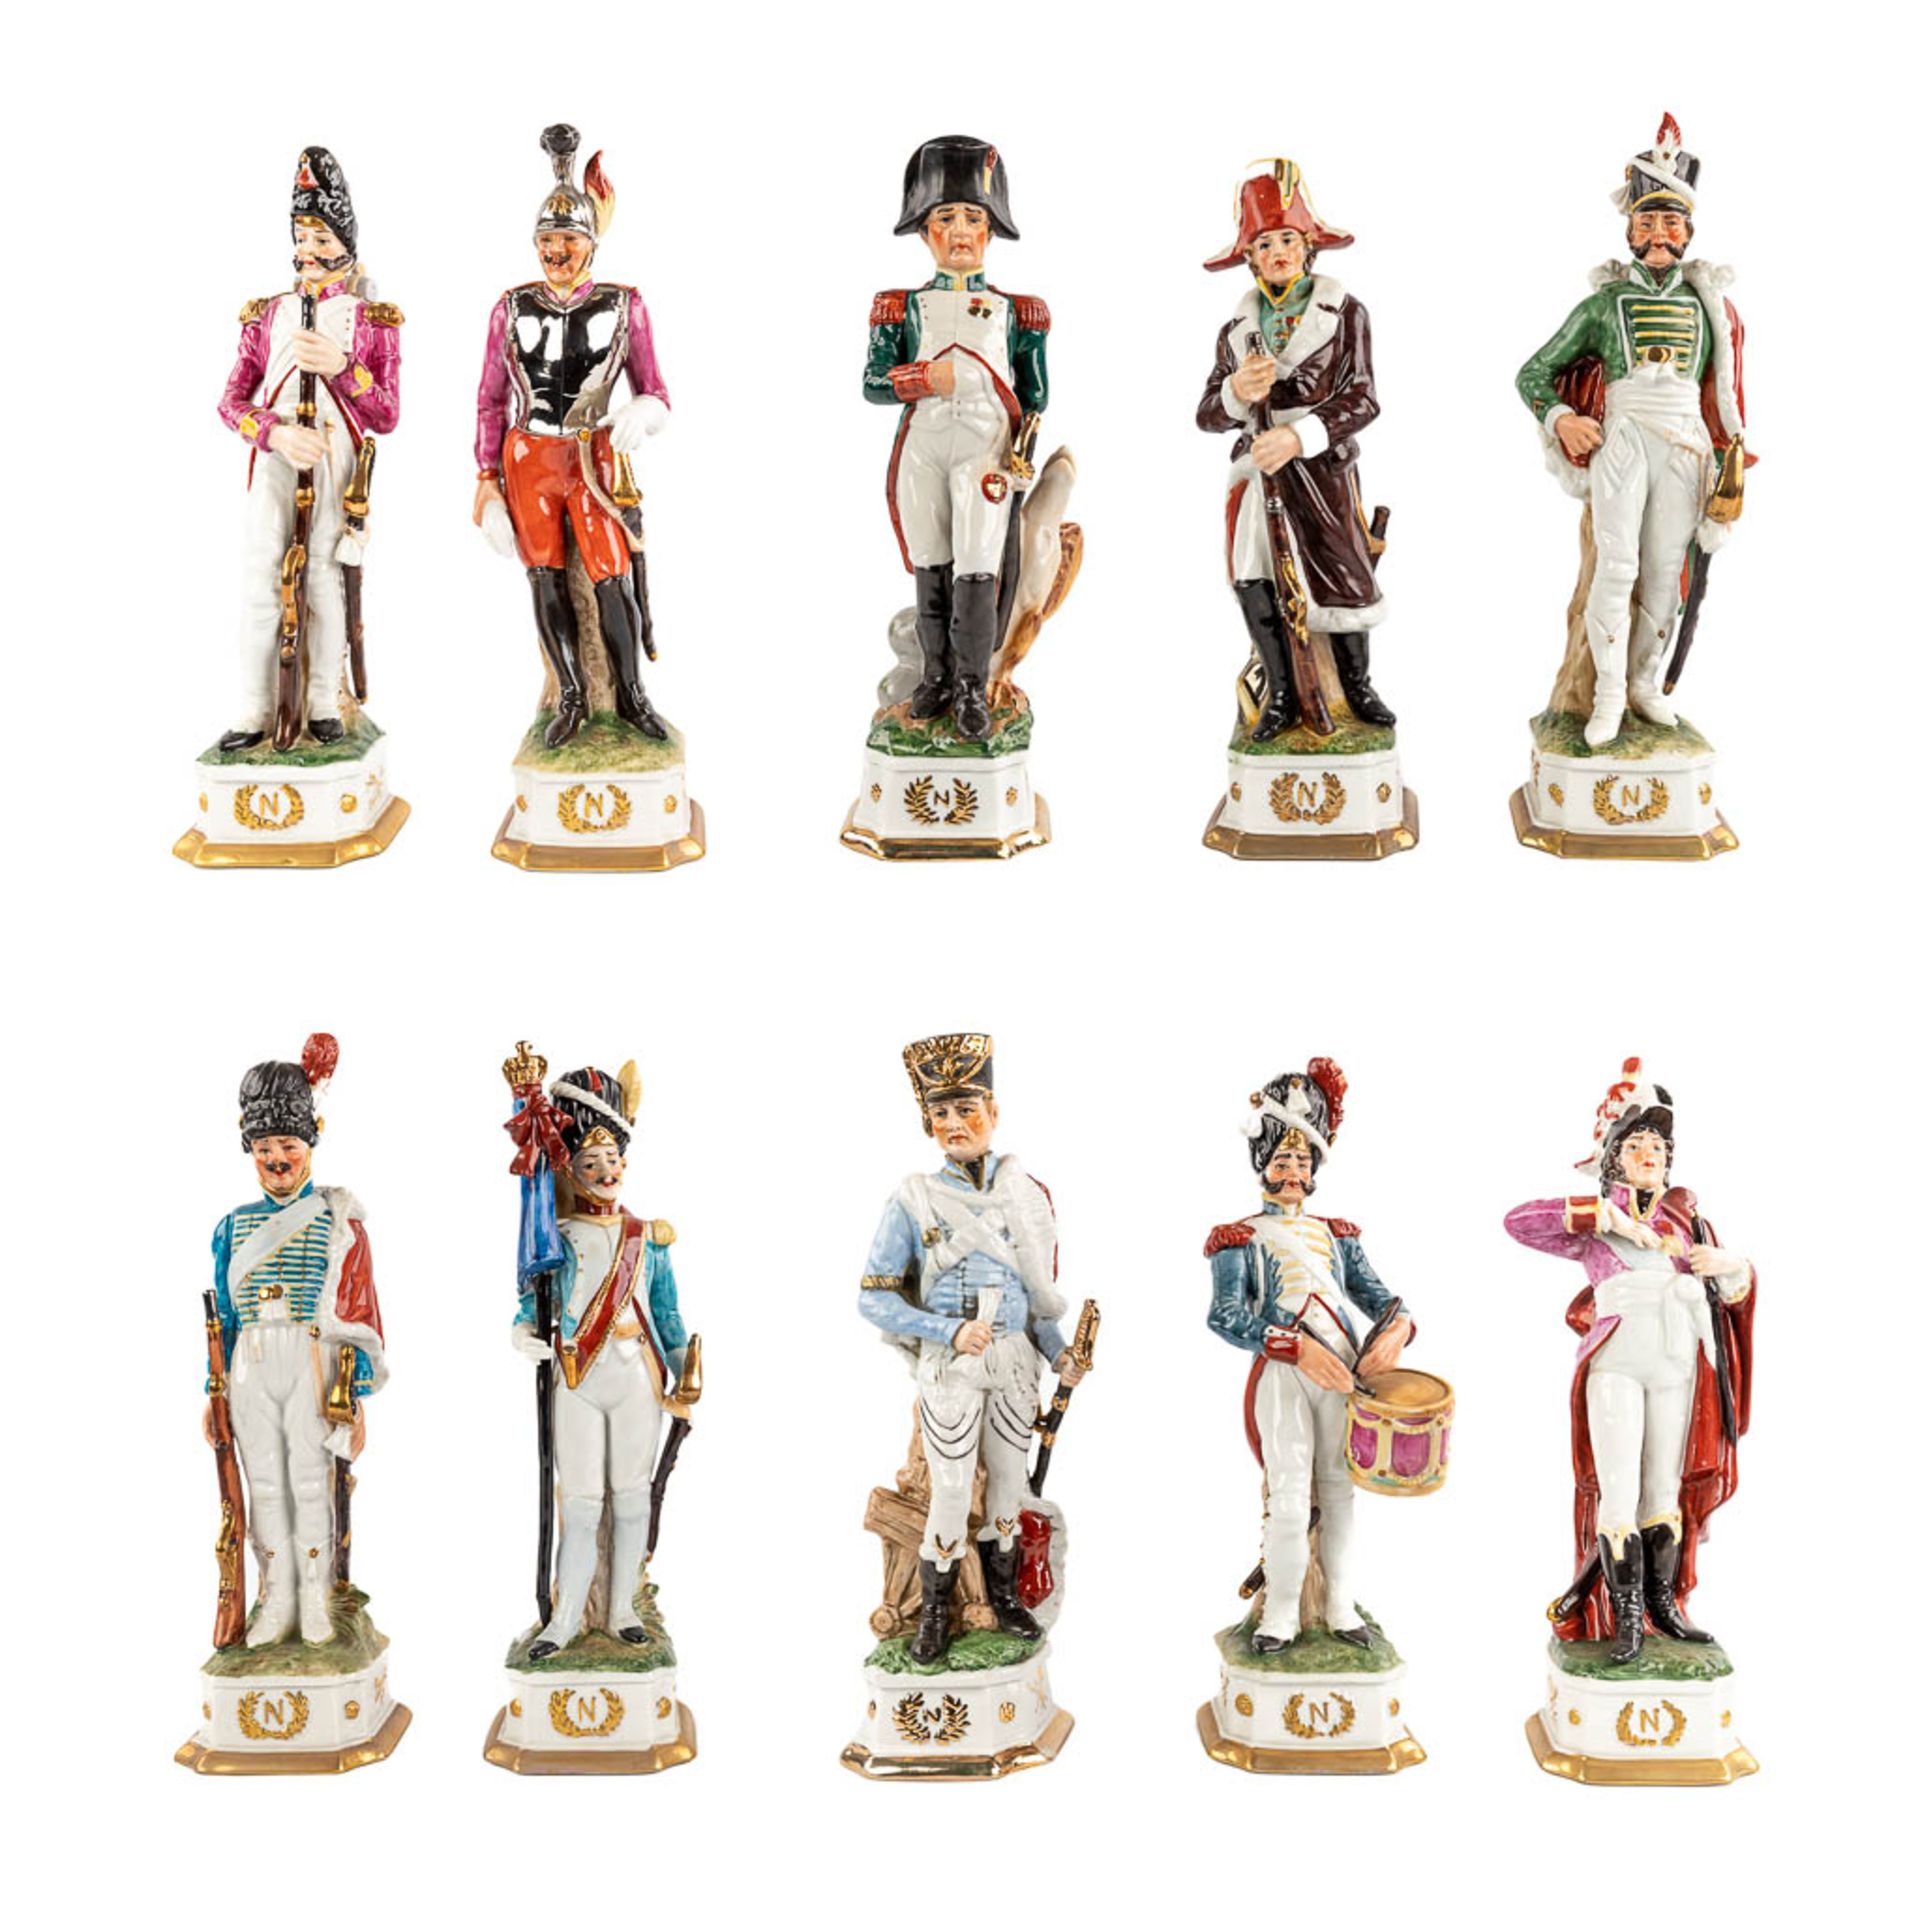 Napoleon and 9 generals, polychrome porcelain. 20th C. (H:32 cm)